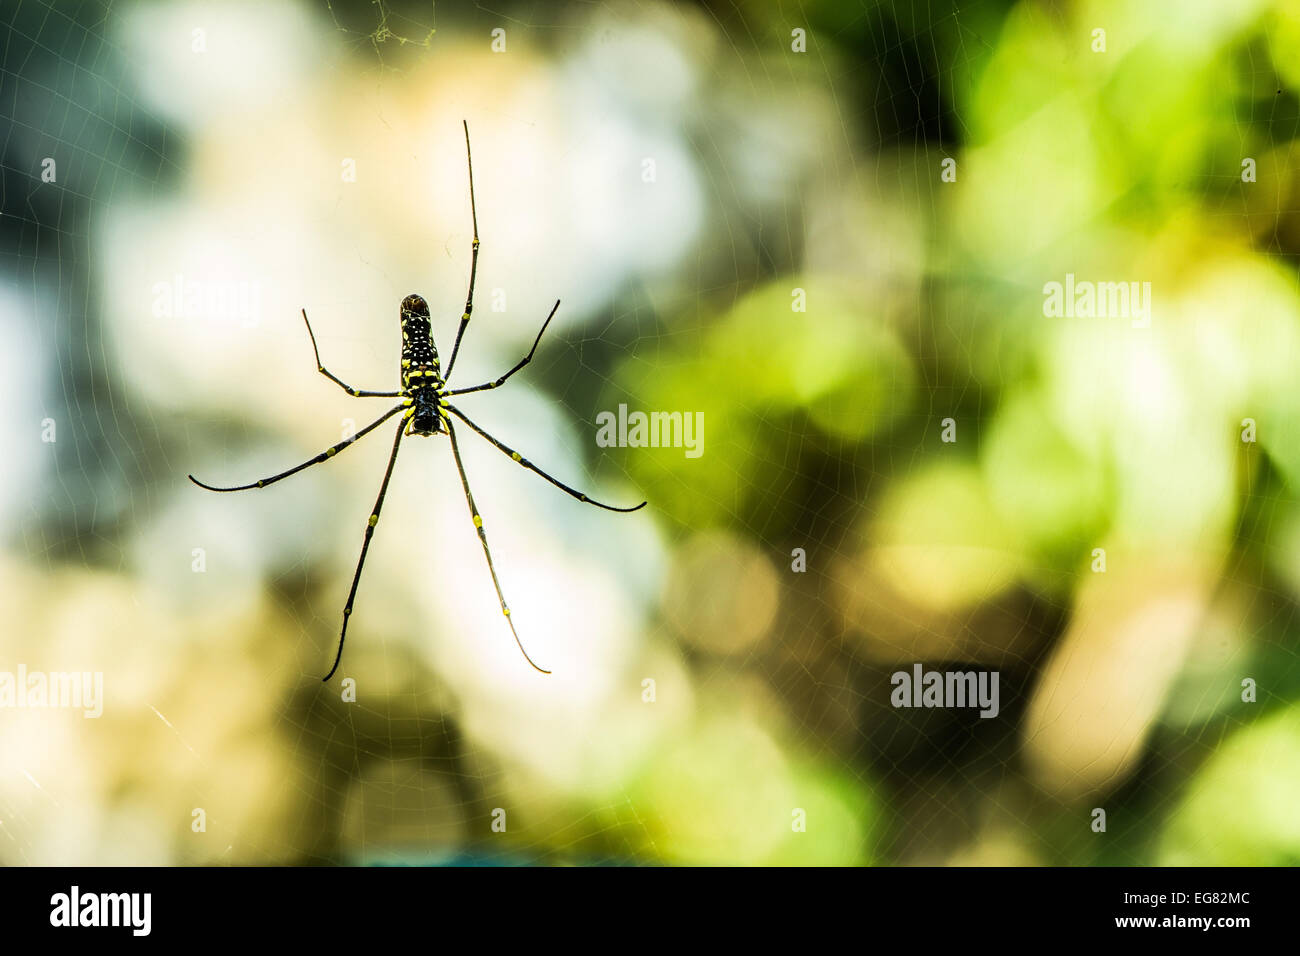 Spider with Defocus Background Stock Photo